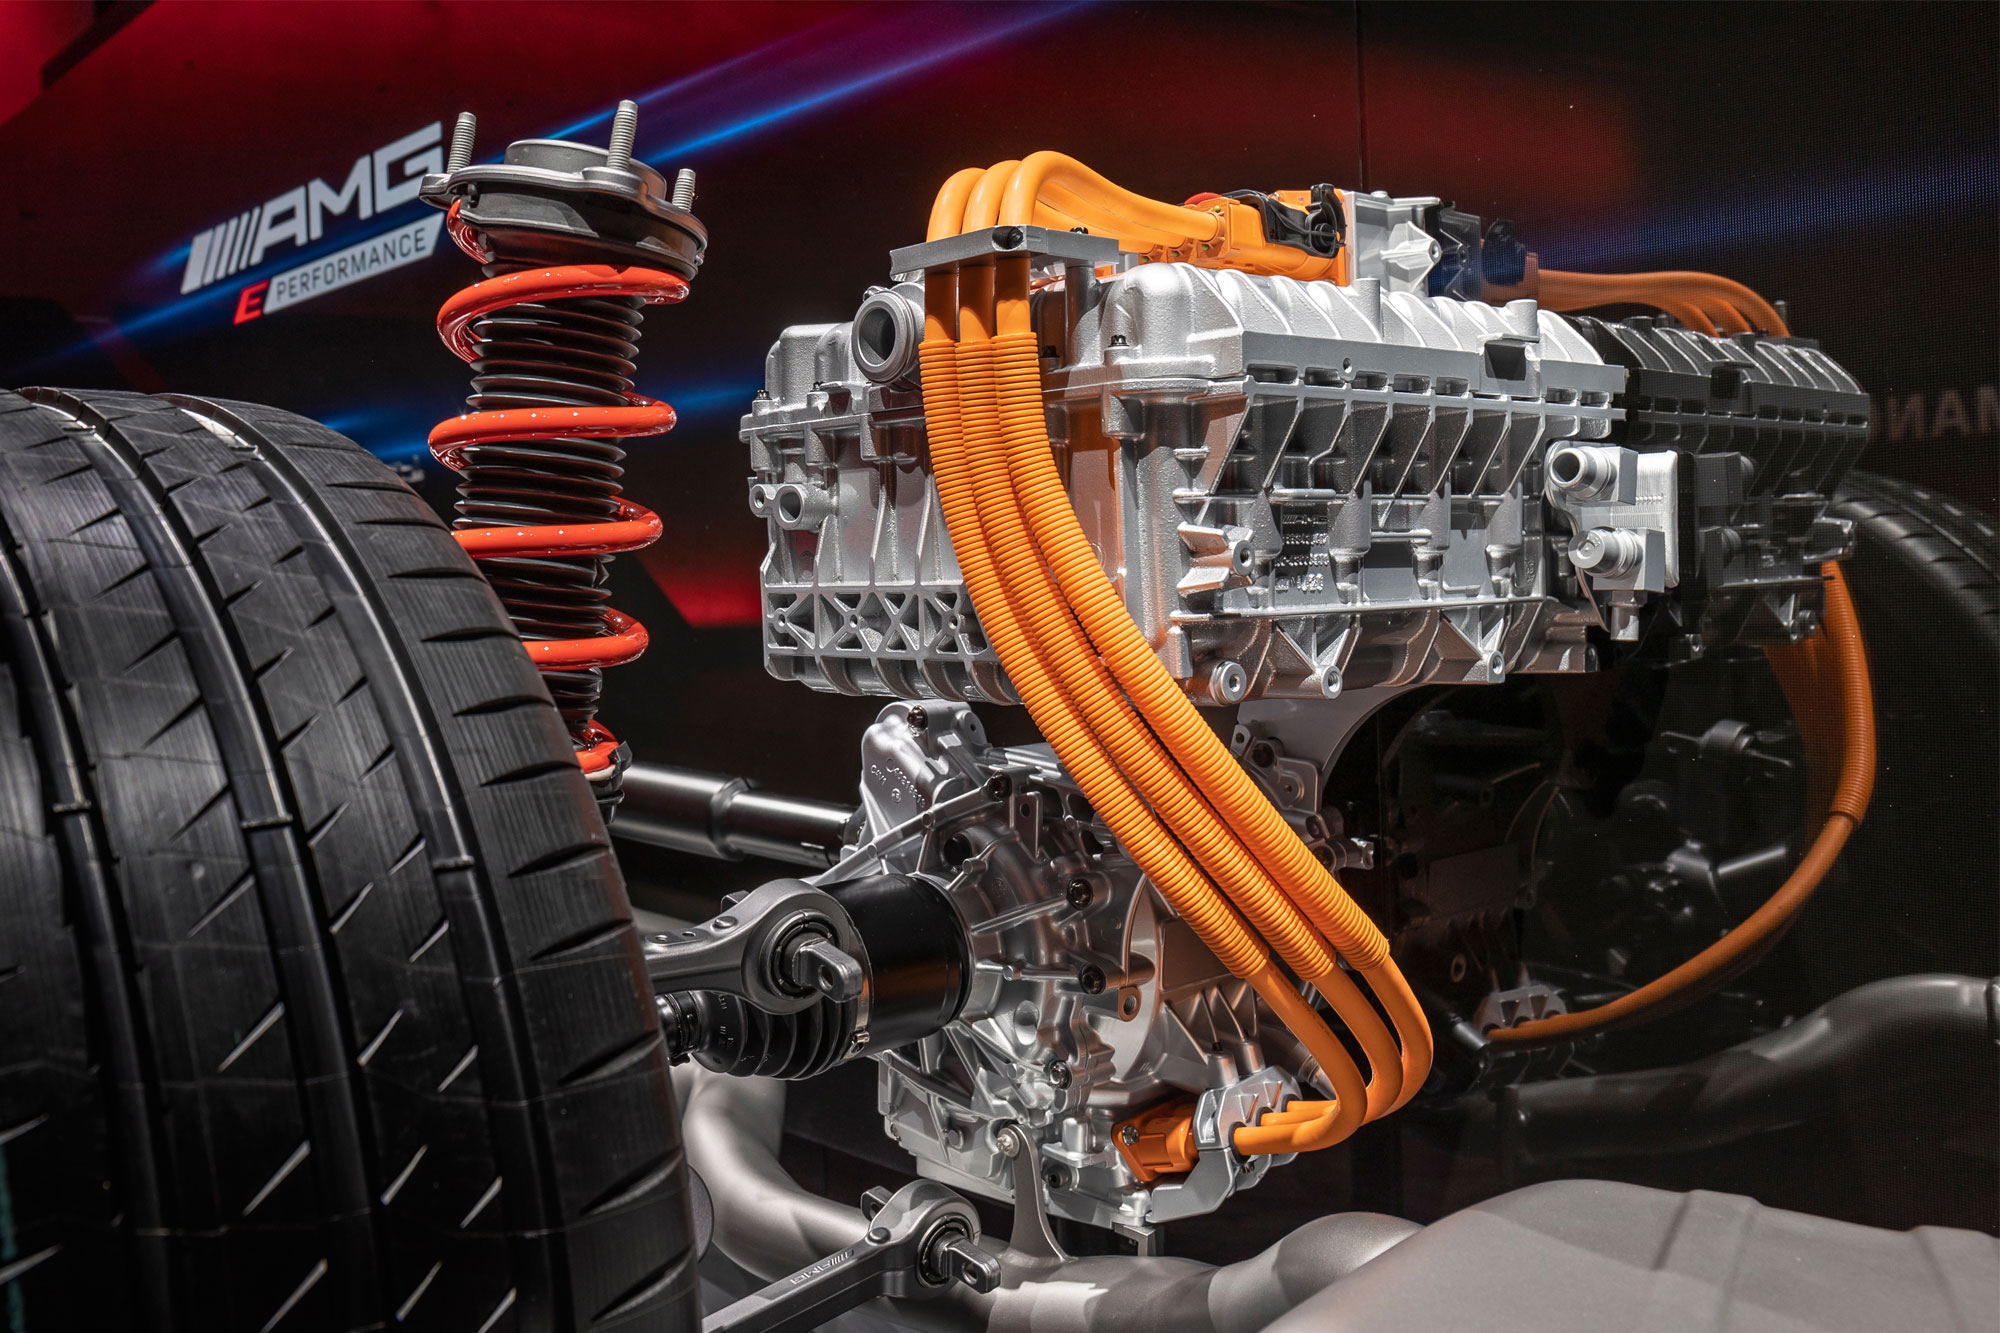 Mercedes-AMG: Η υβριδική τεχνολογία προς όφελος των επιδόσεων!